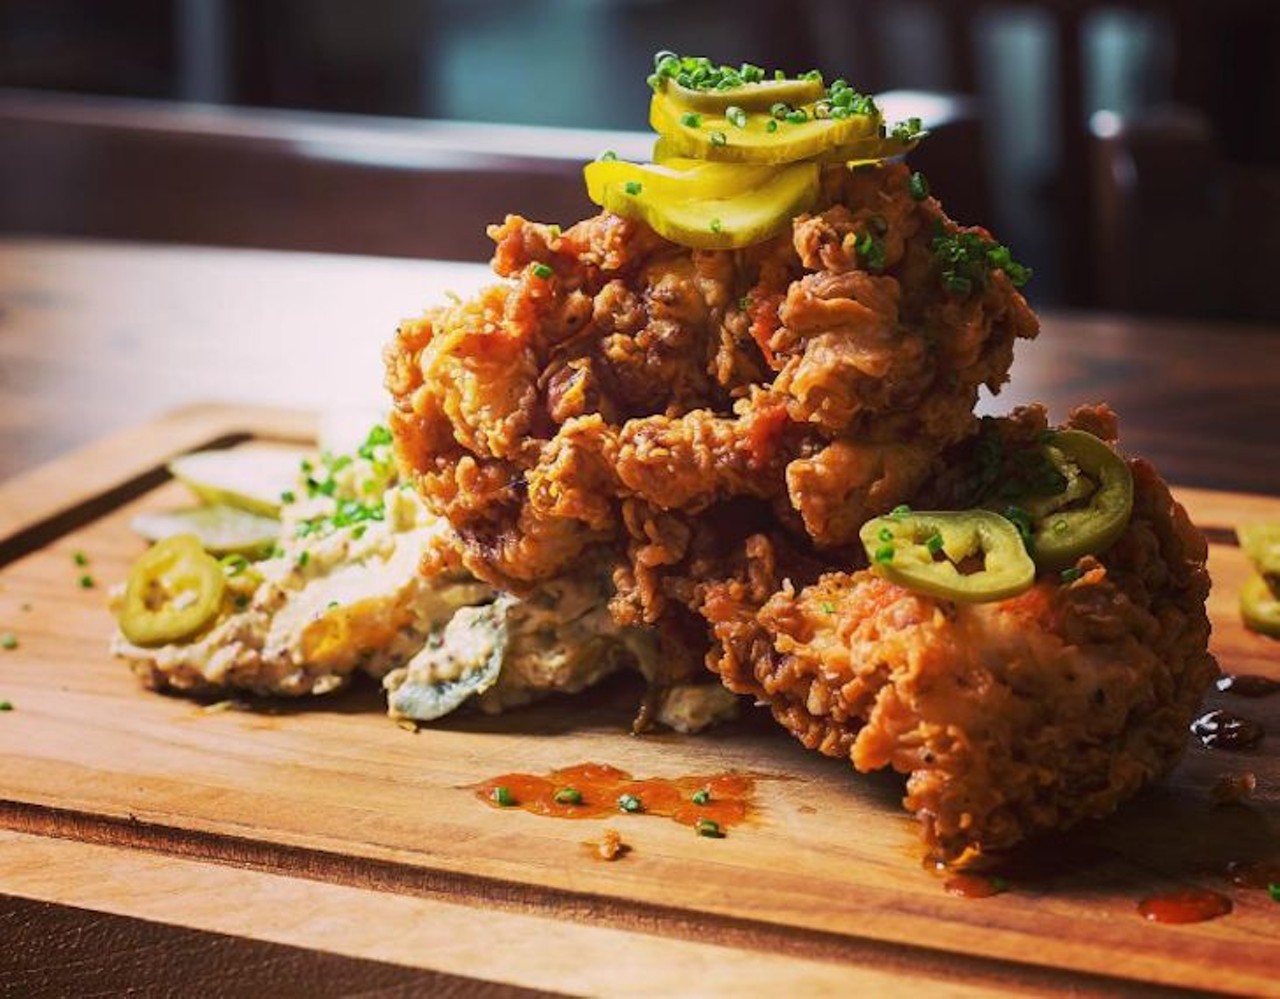 Must Try: Fried Chicken 
Photo via northquartertavern/Instagram